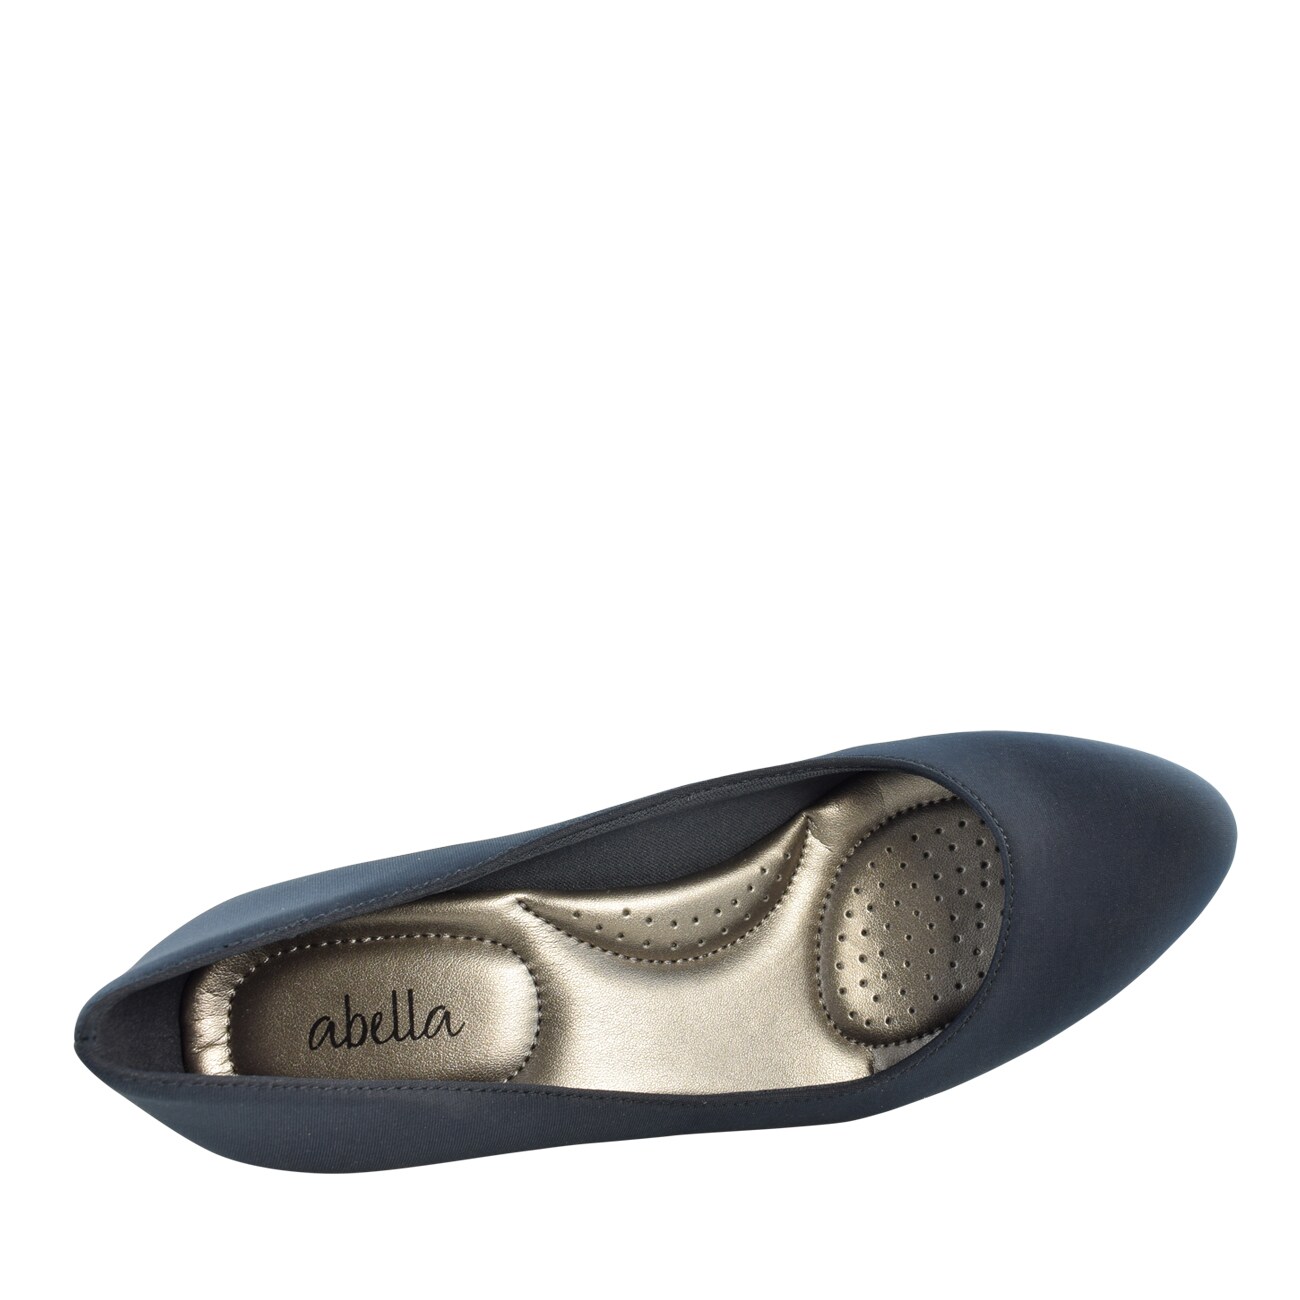 abella judith shoes